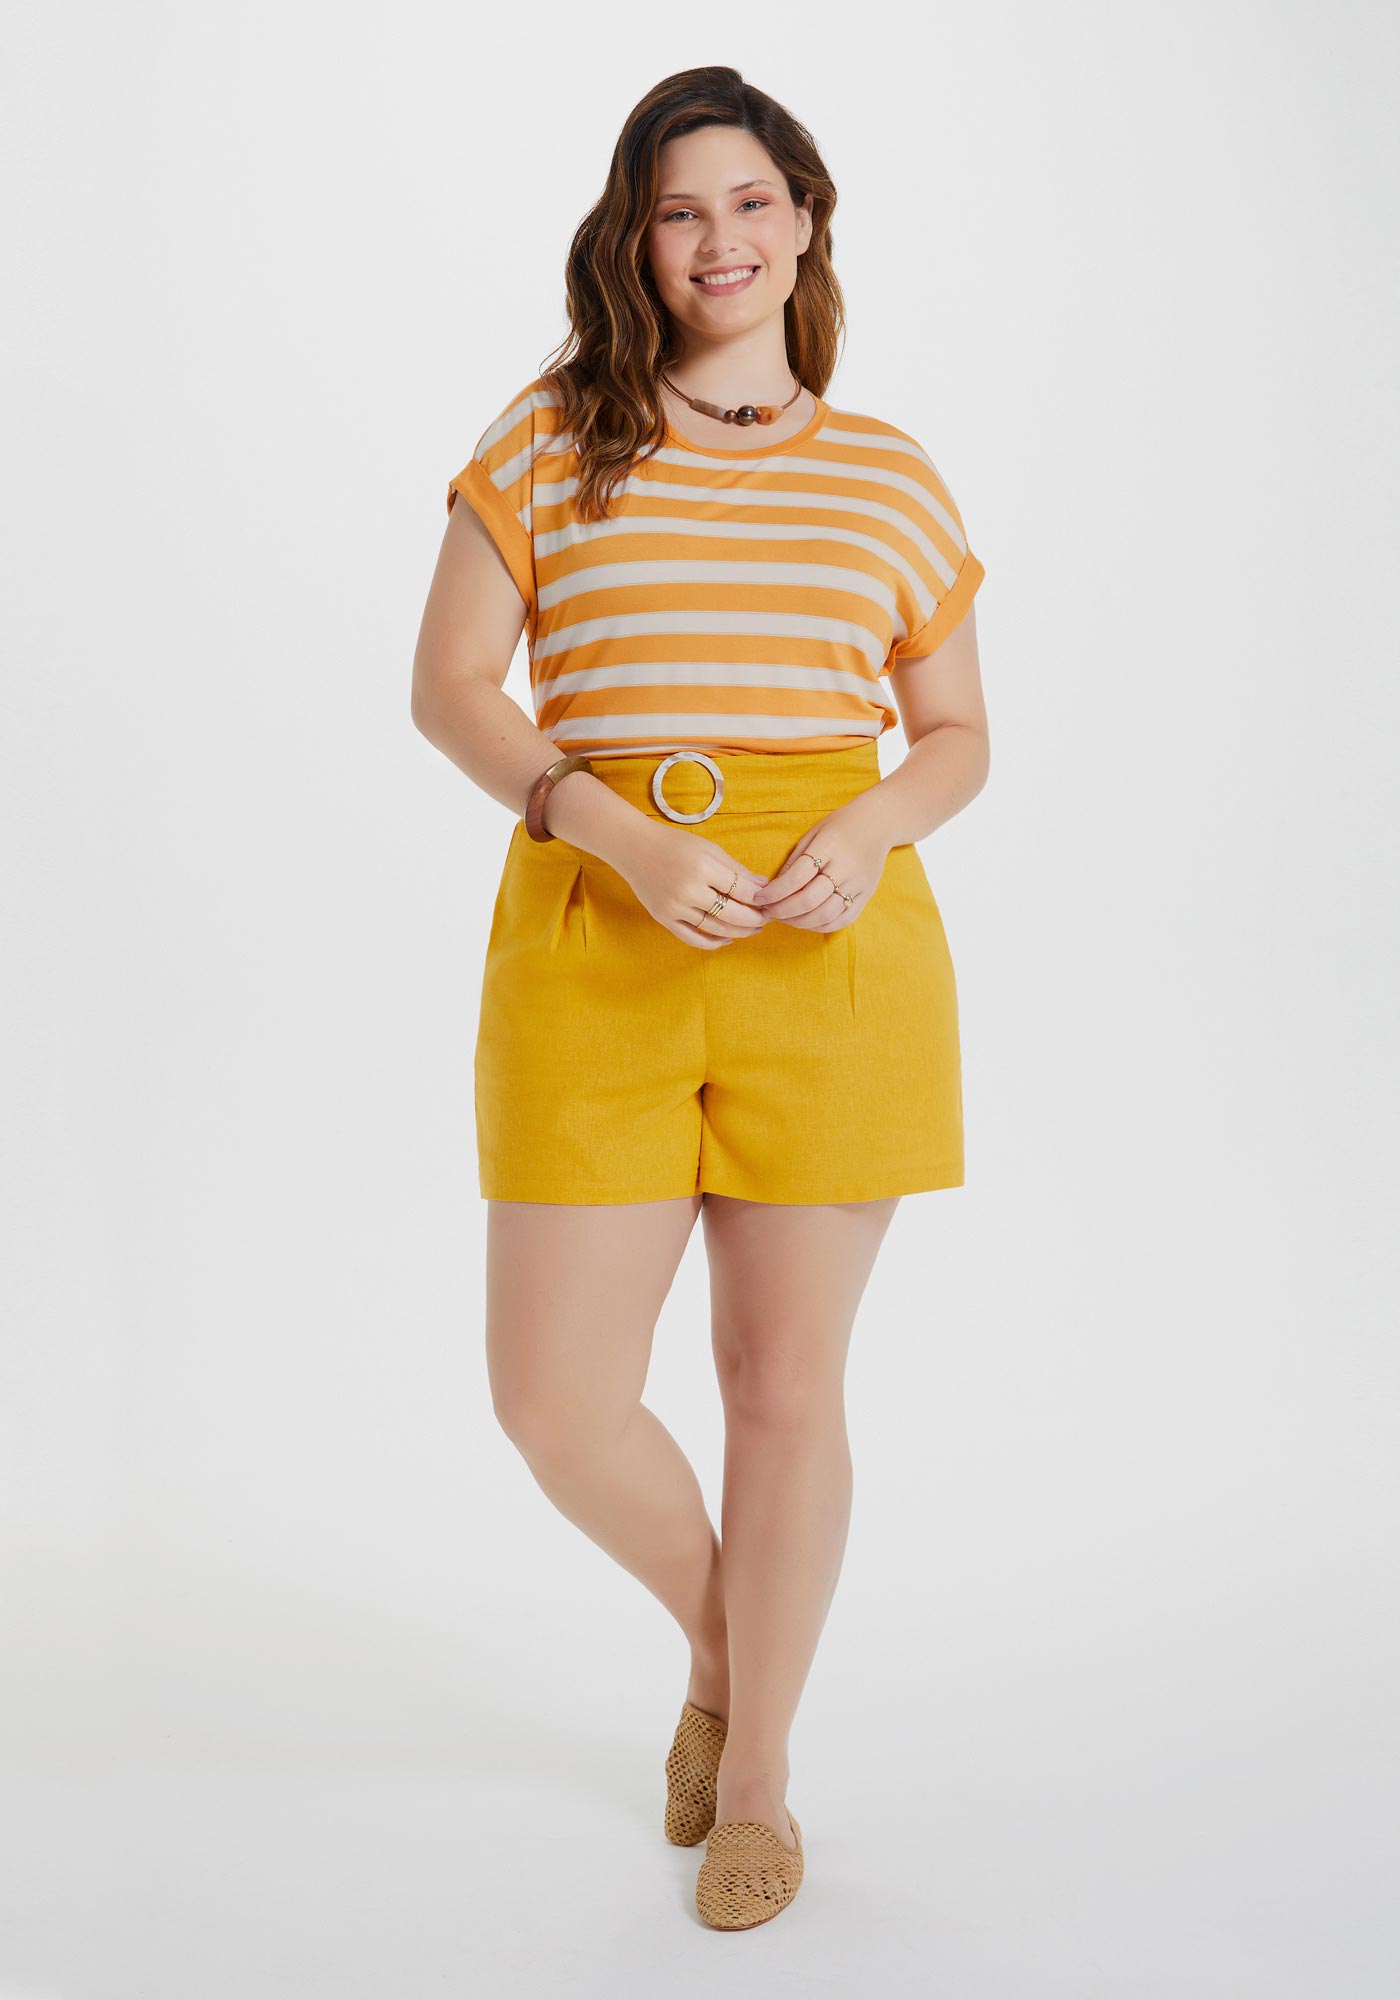 Blusa Plus Size Lunender Malha Lino Cosy Feminina - Amarelo